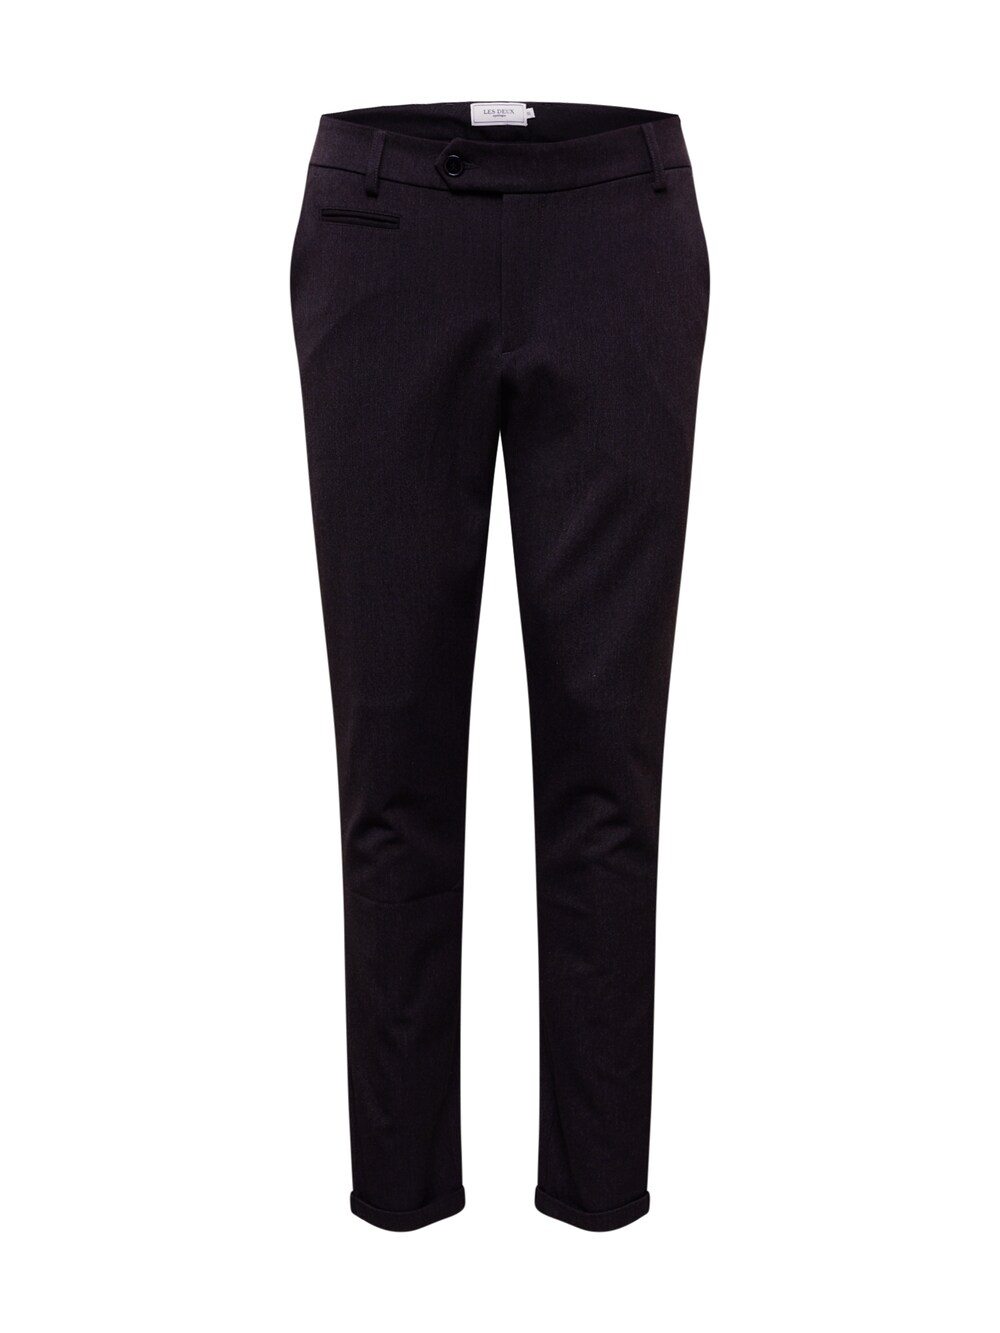 Узкие брюки Les Deux Como, антрацит брюки suit pants como les deux цвет black